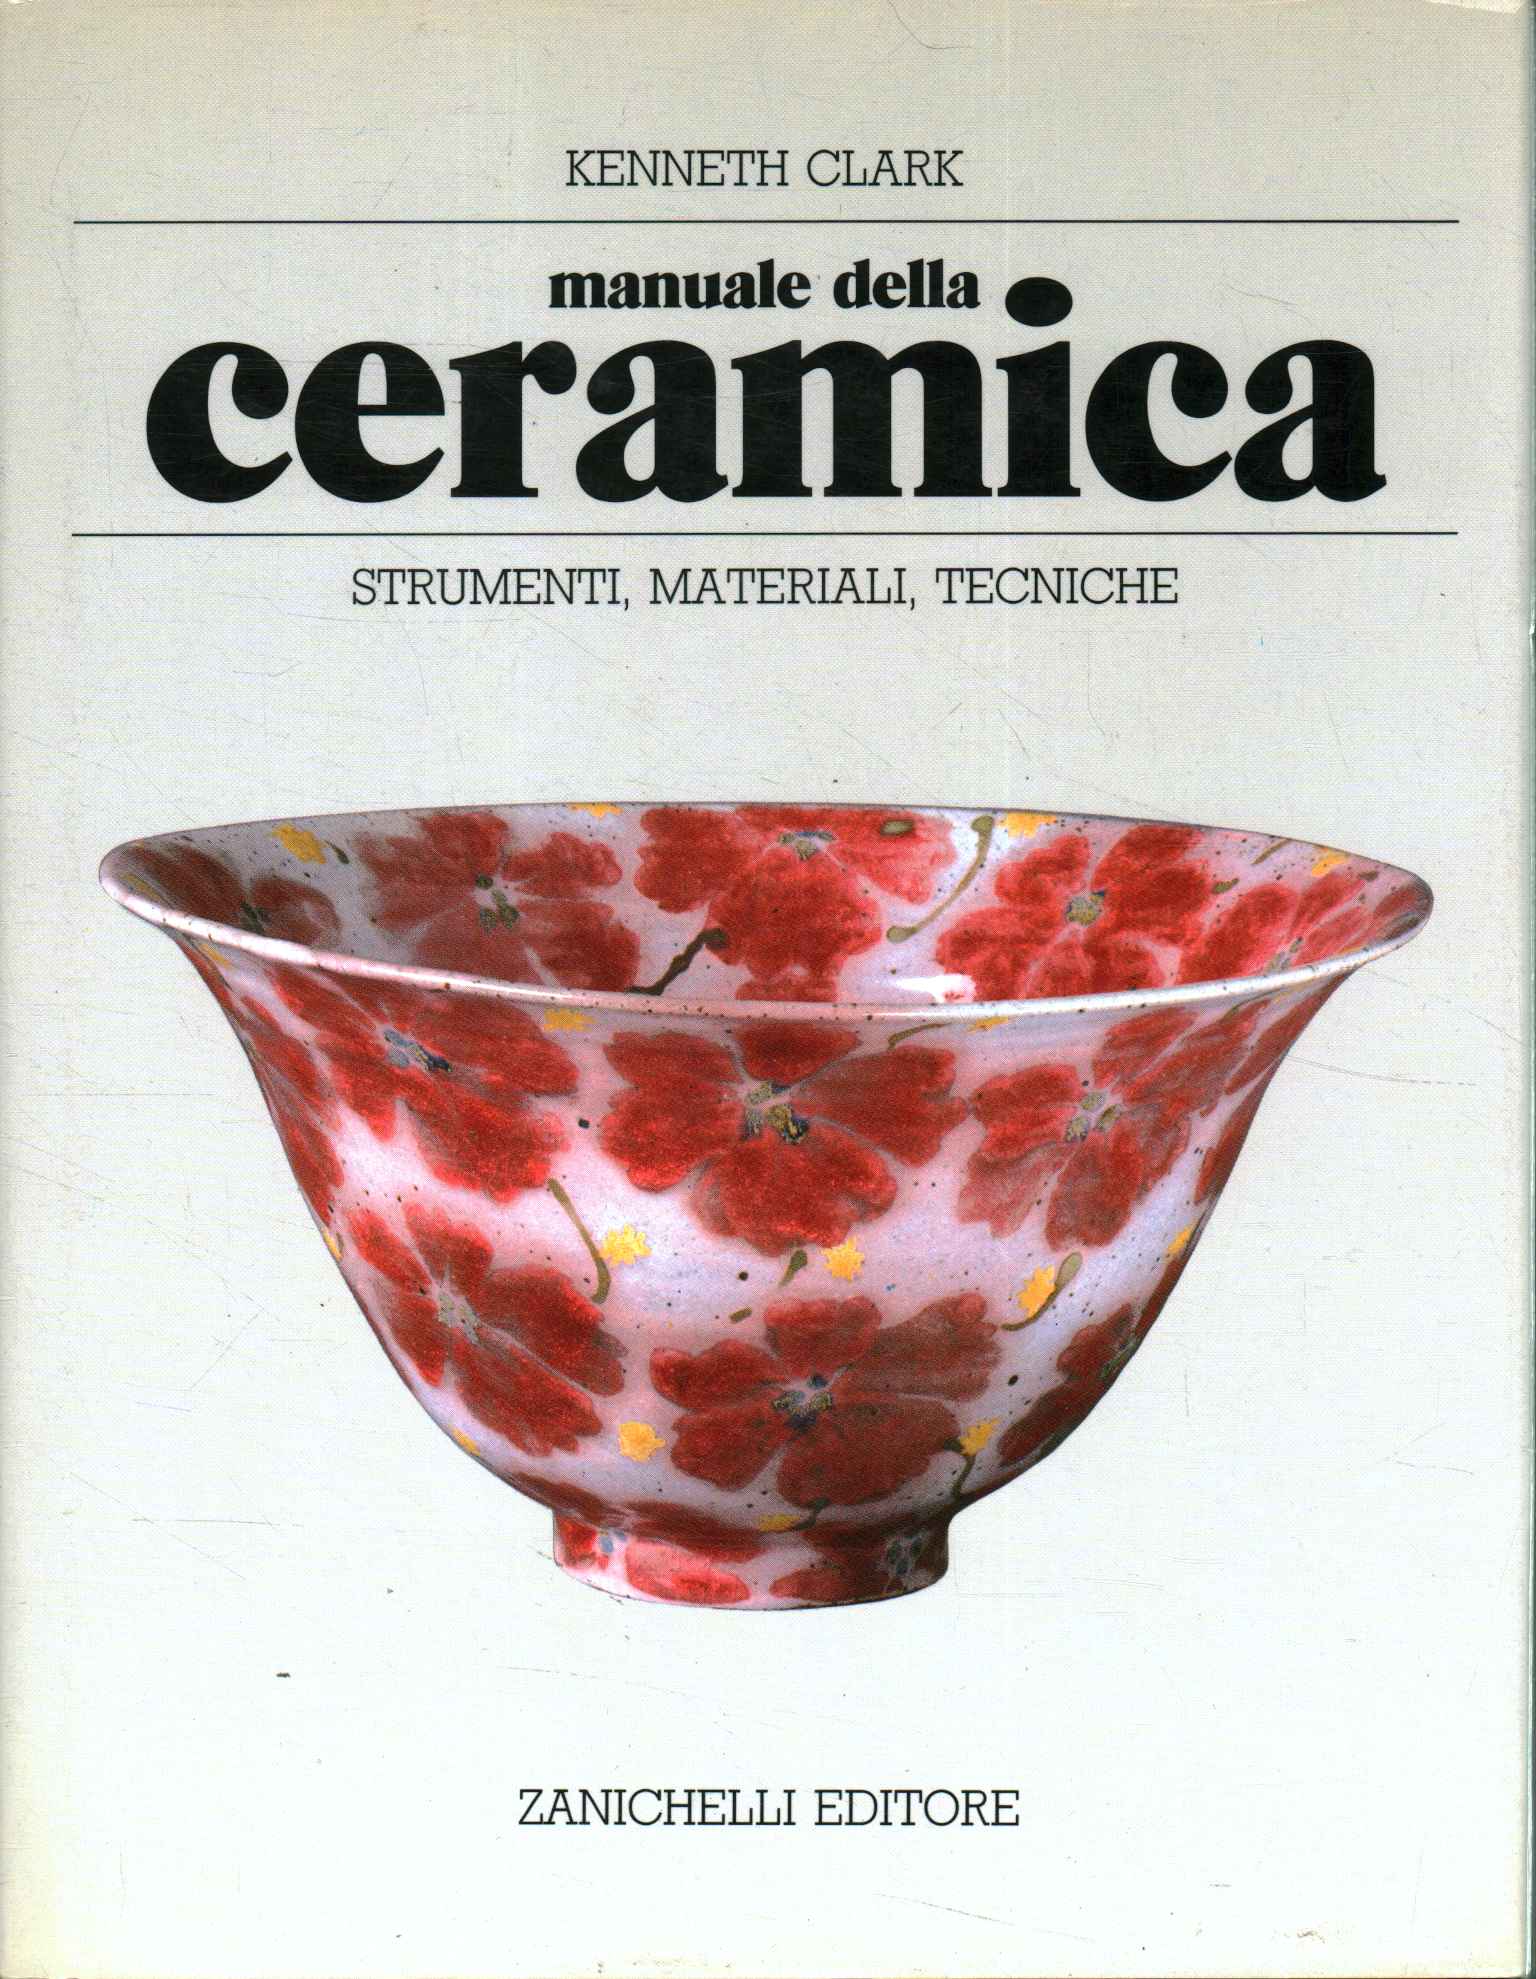 manual de ceramica